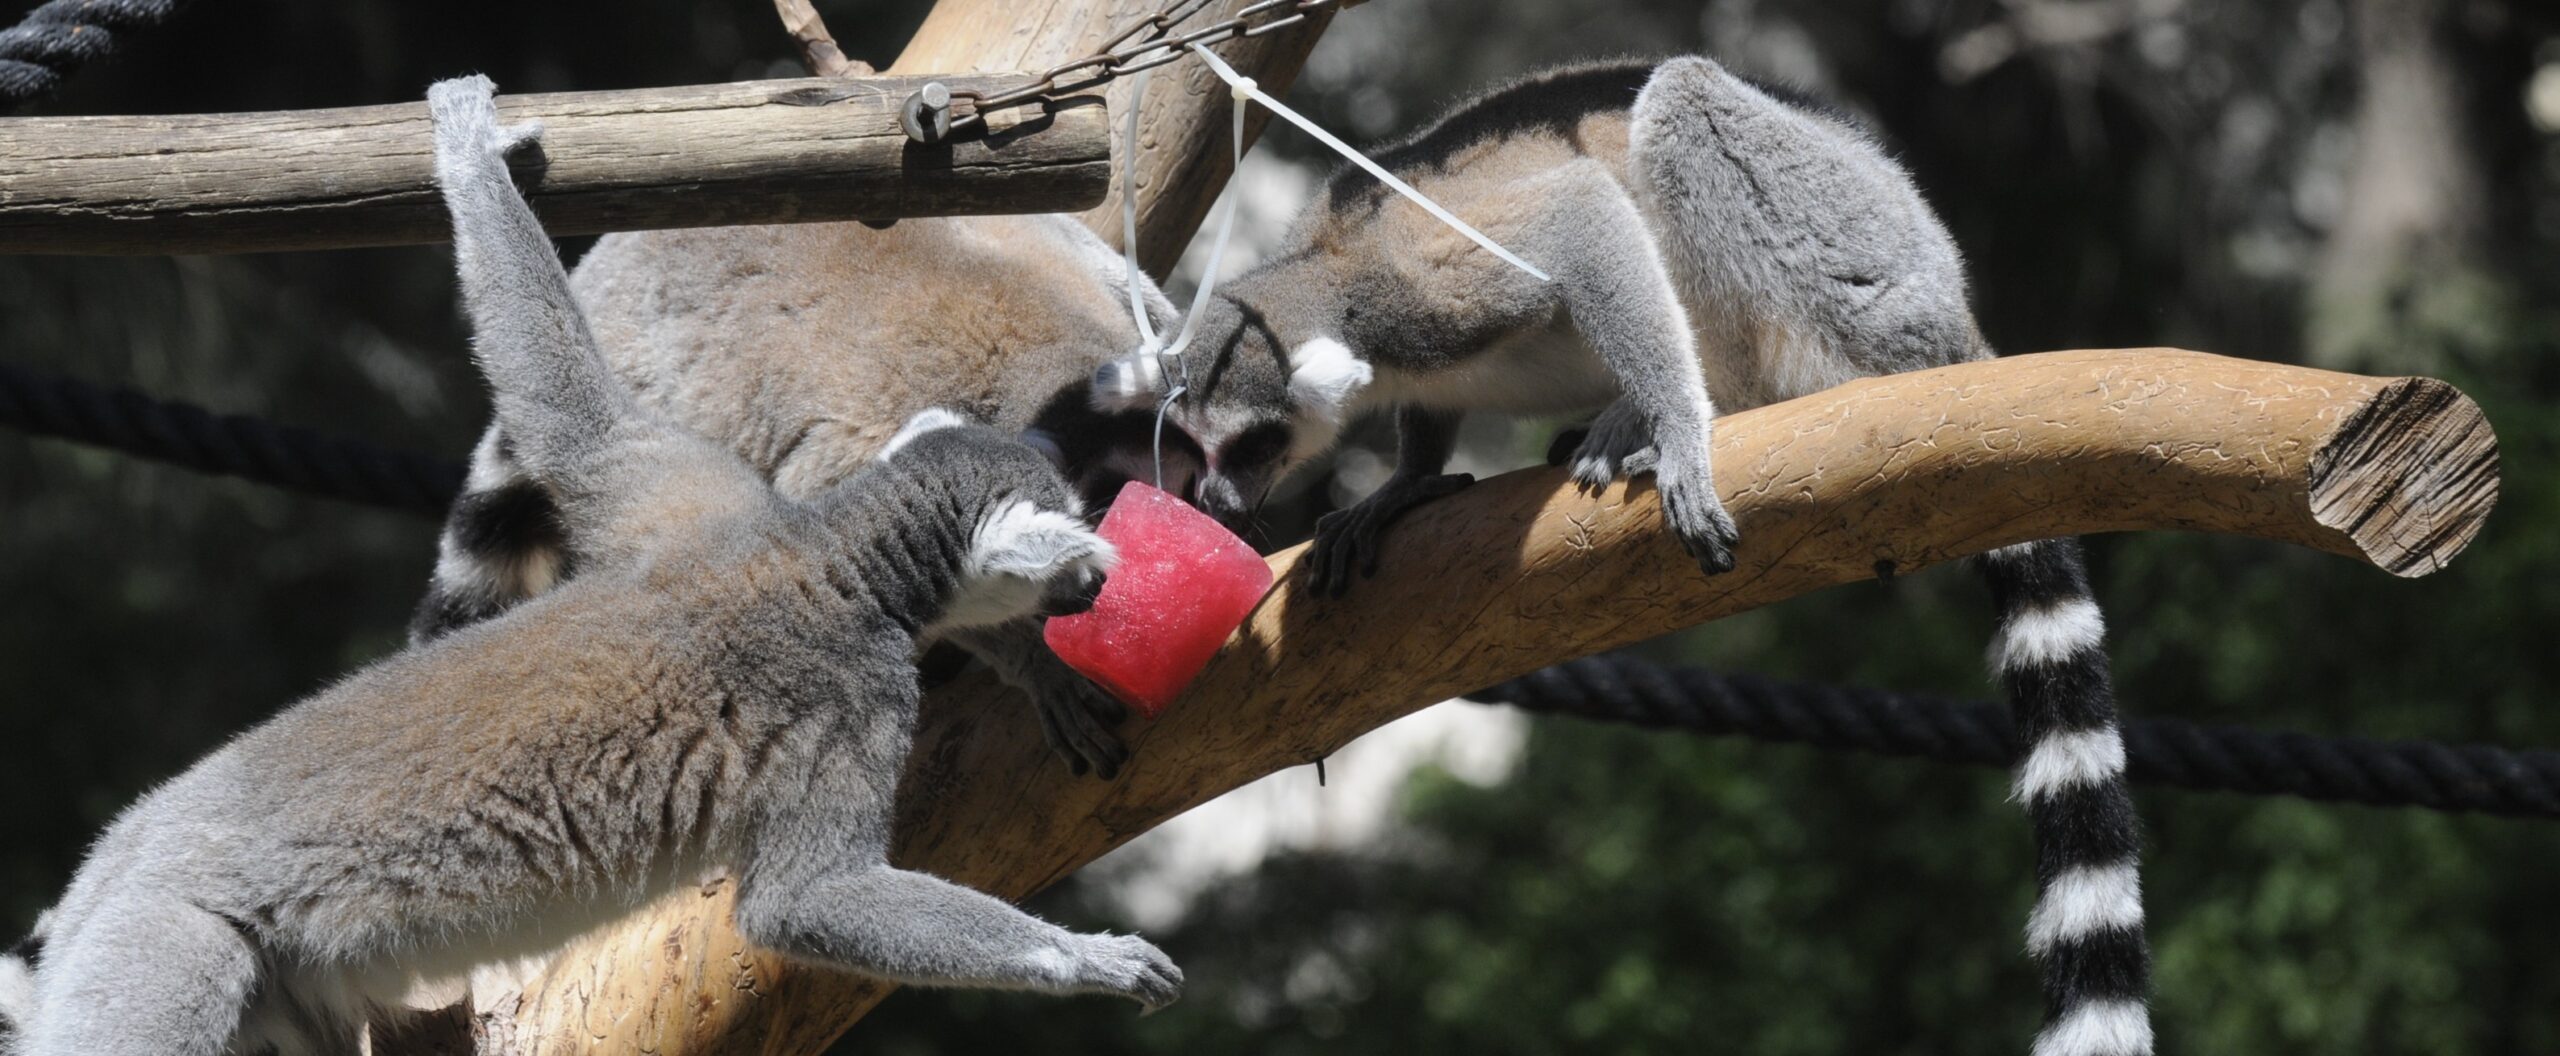 Lemurs at the Ramat Gan Safari beat the heat with popsicles.